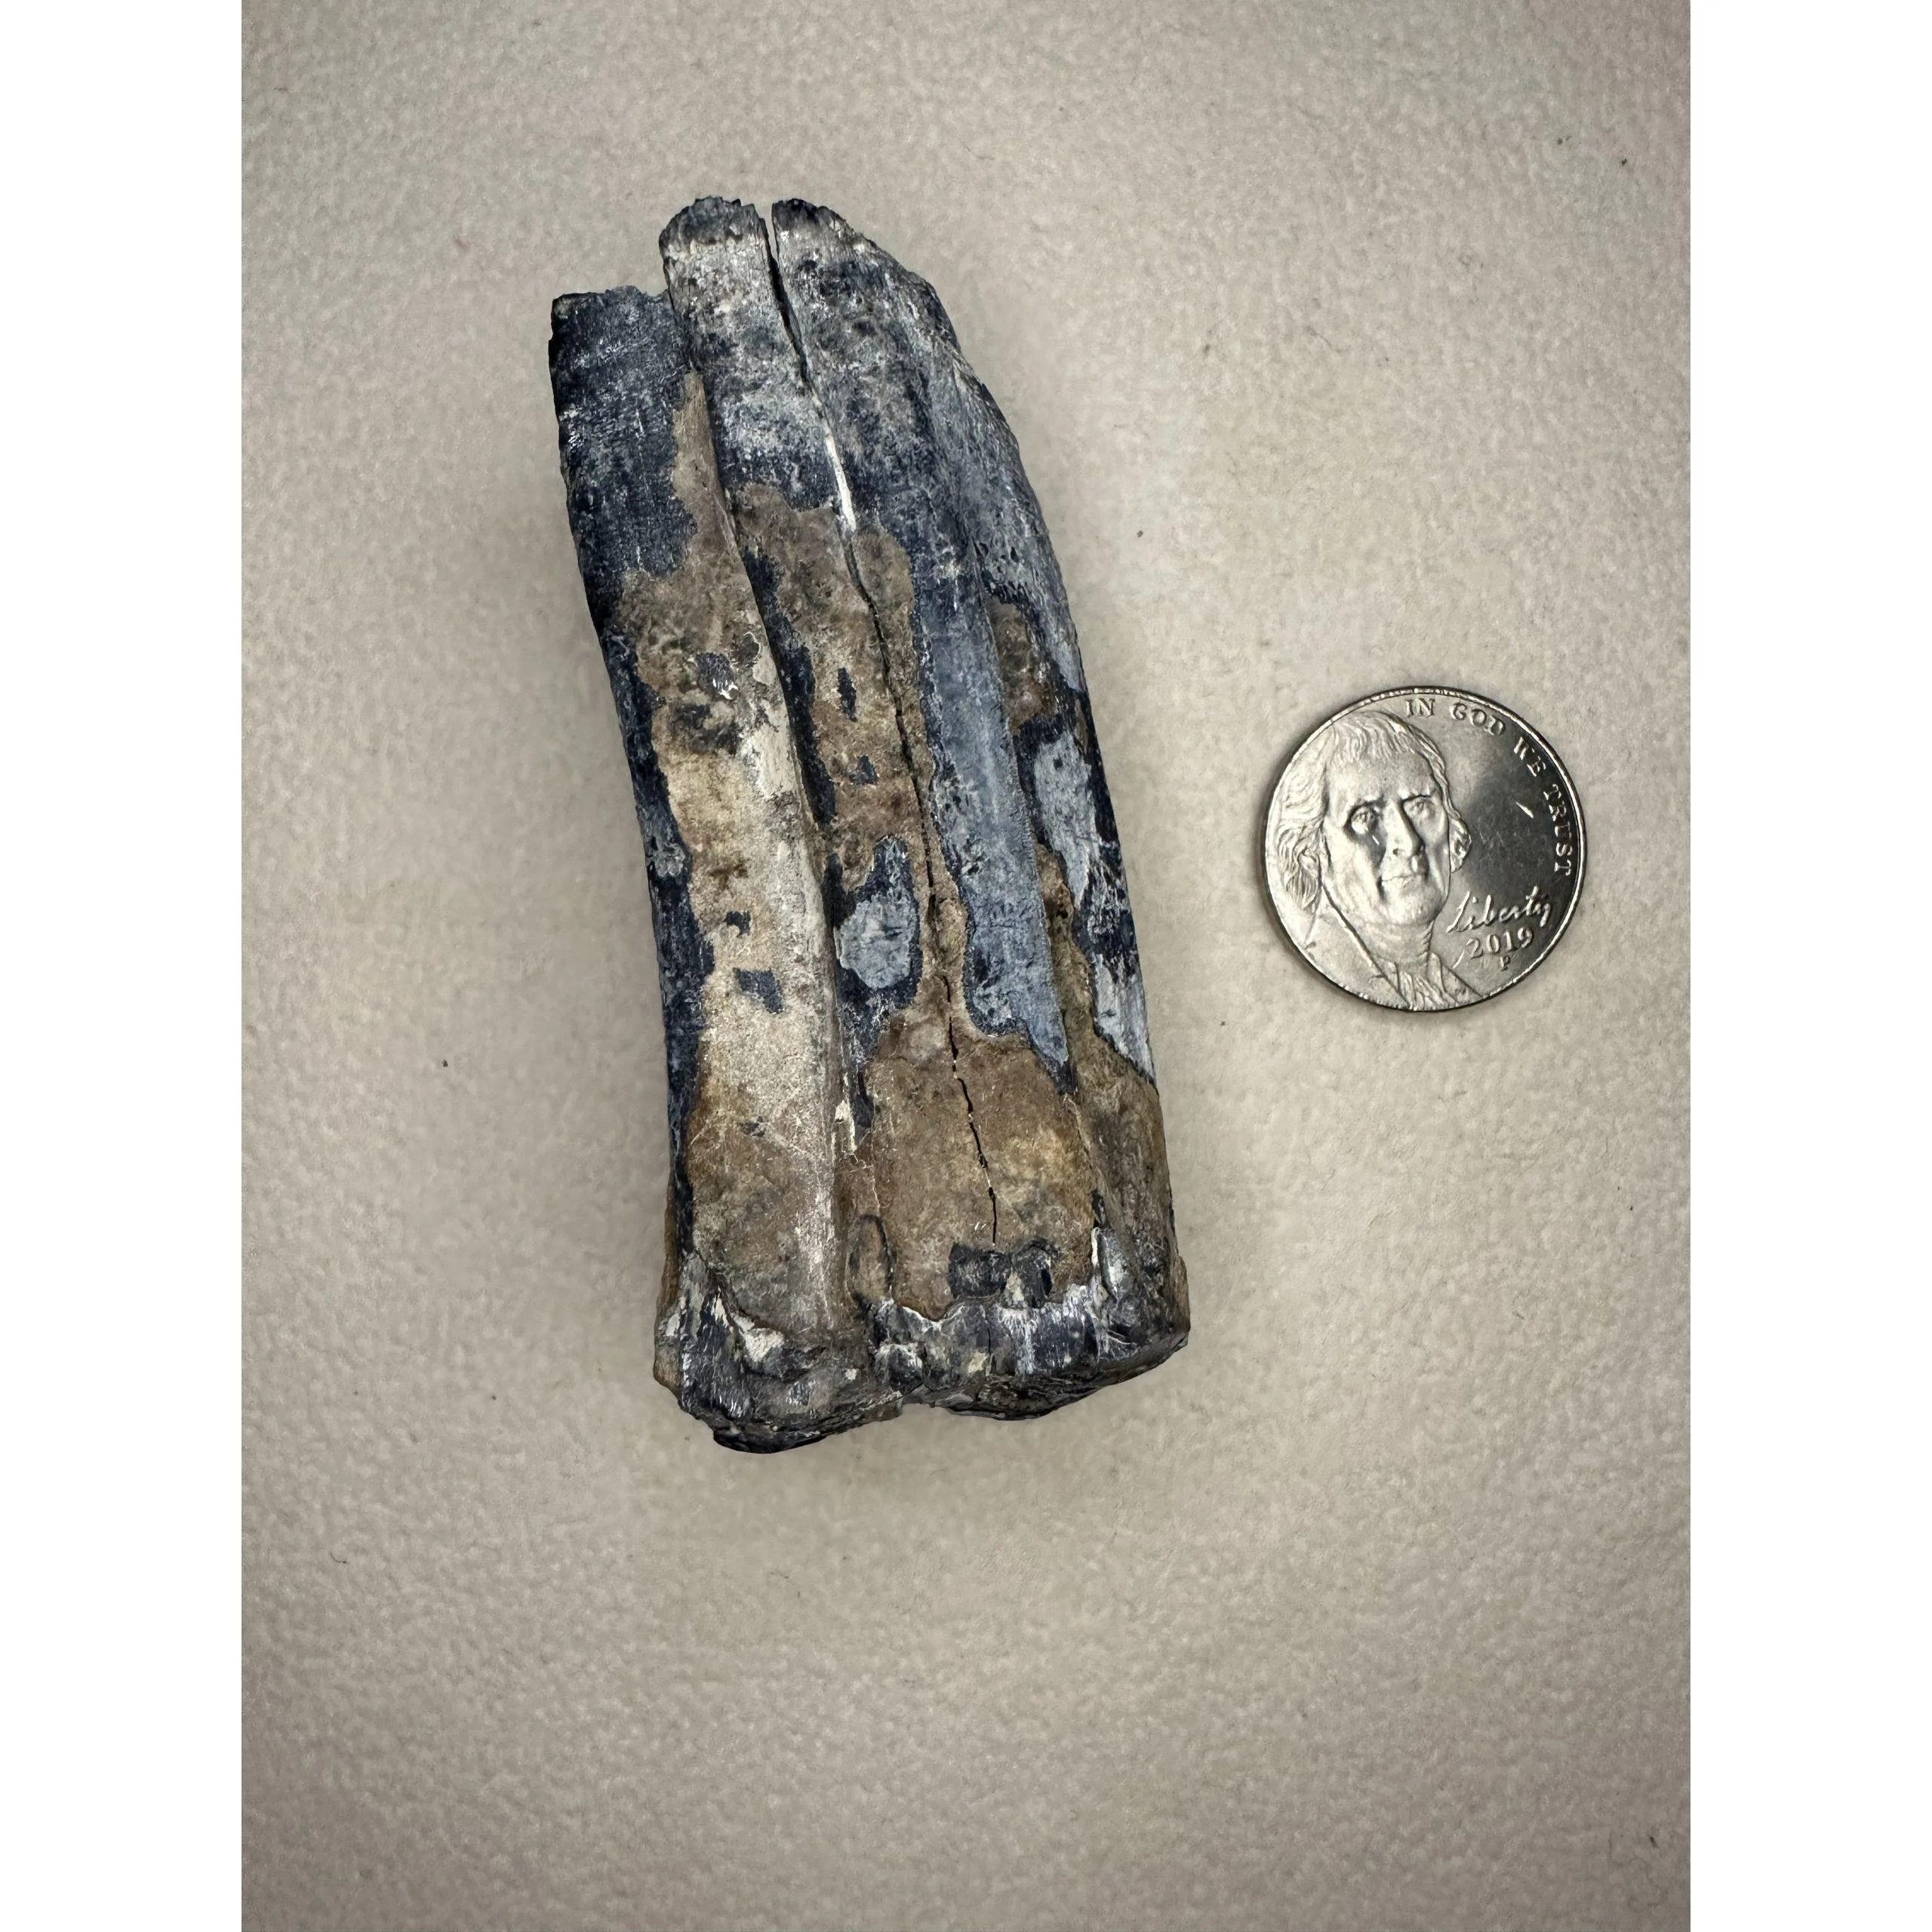 Fossil Horse Tooth – Florida, blue vivianite mineralization Prehistoric Online